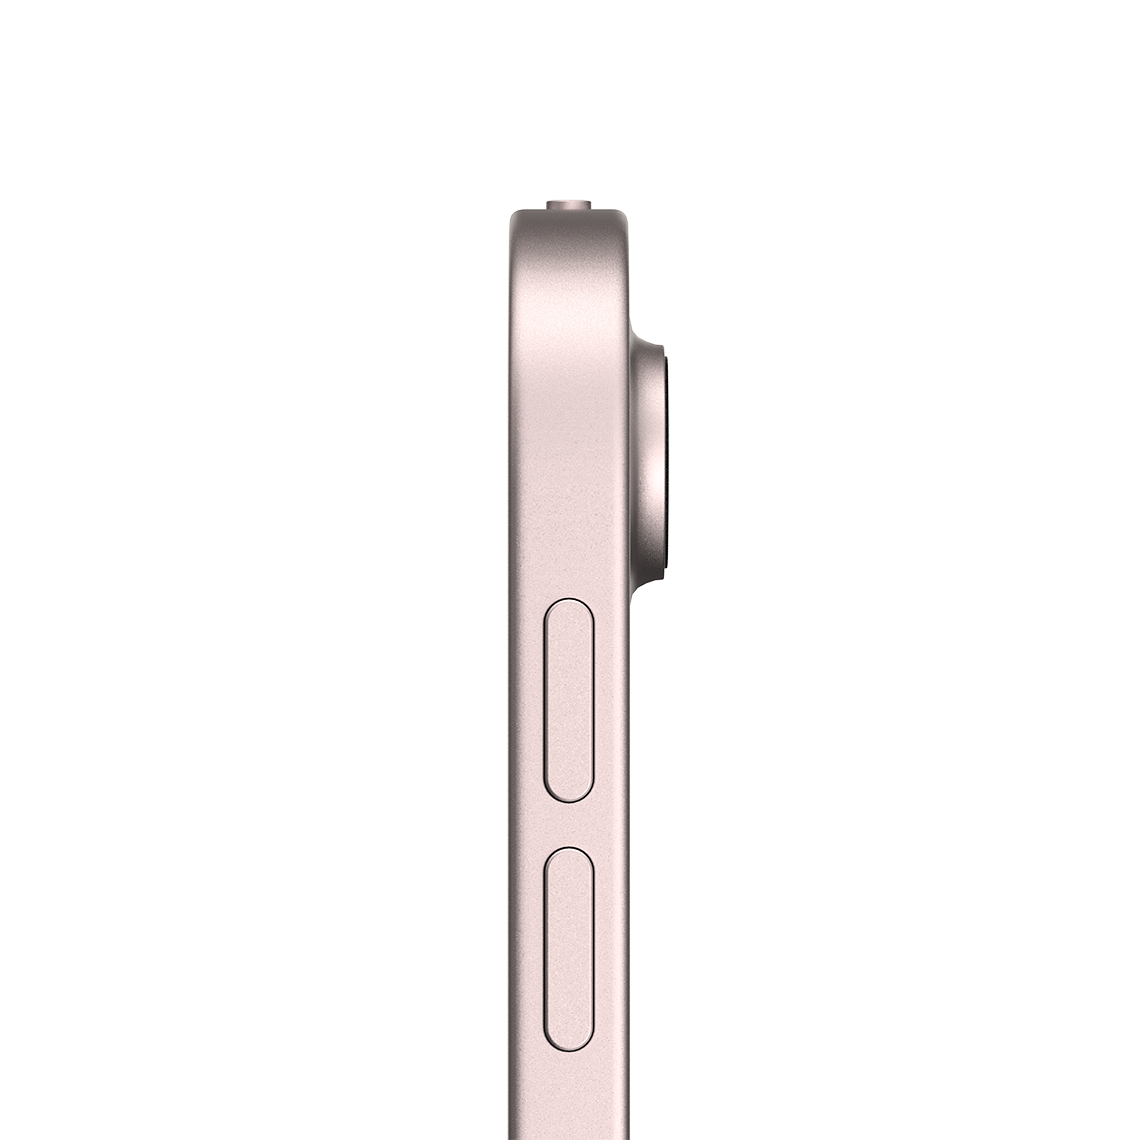 Apple iPad Air 10.9-inch 5th Generation - Pink - 64GB, Wi-Fi + Cellular, Grade A